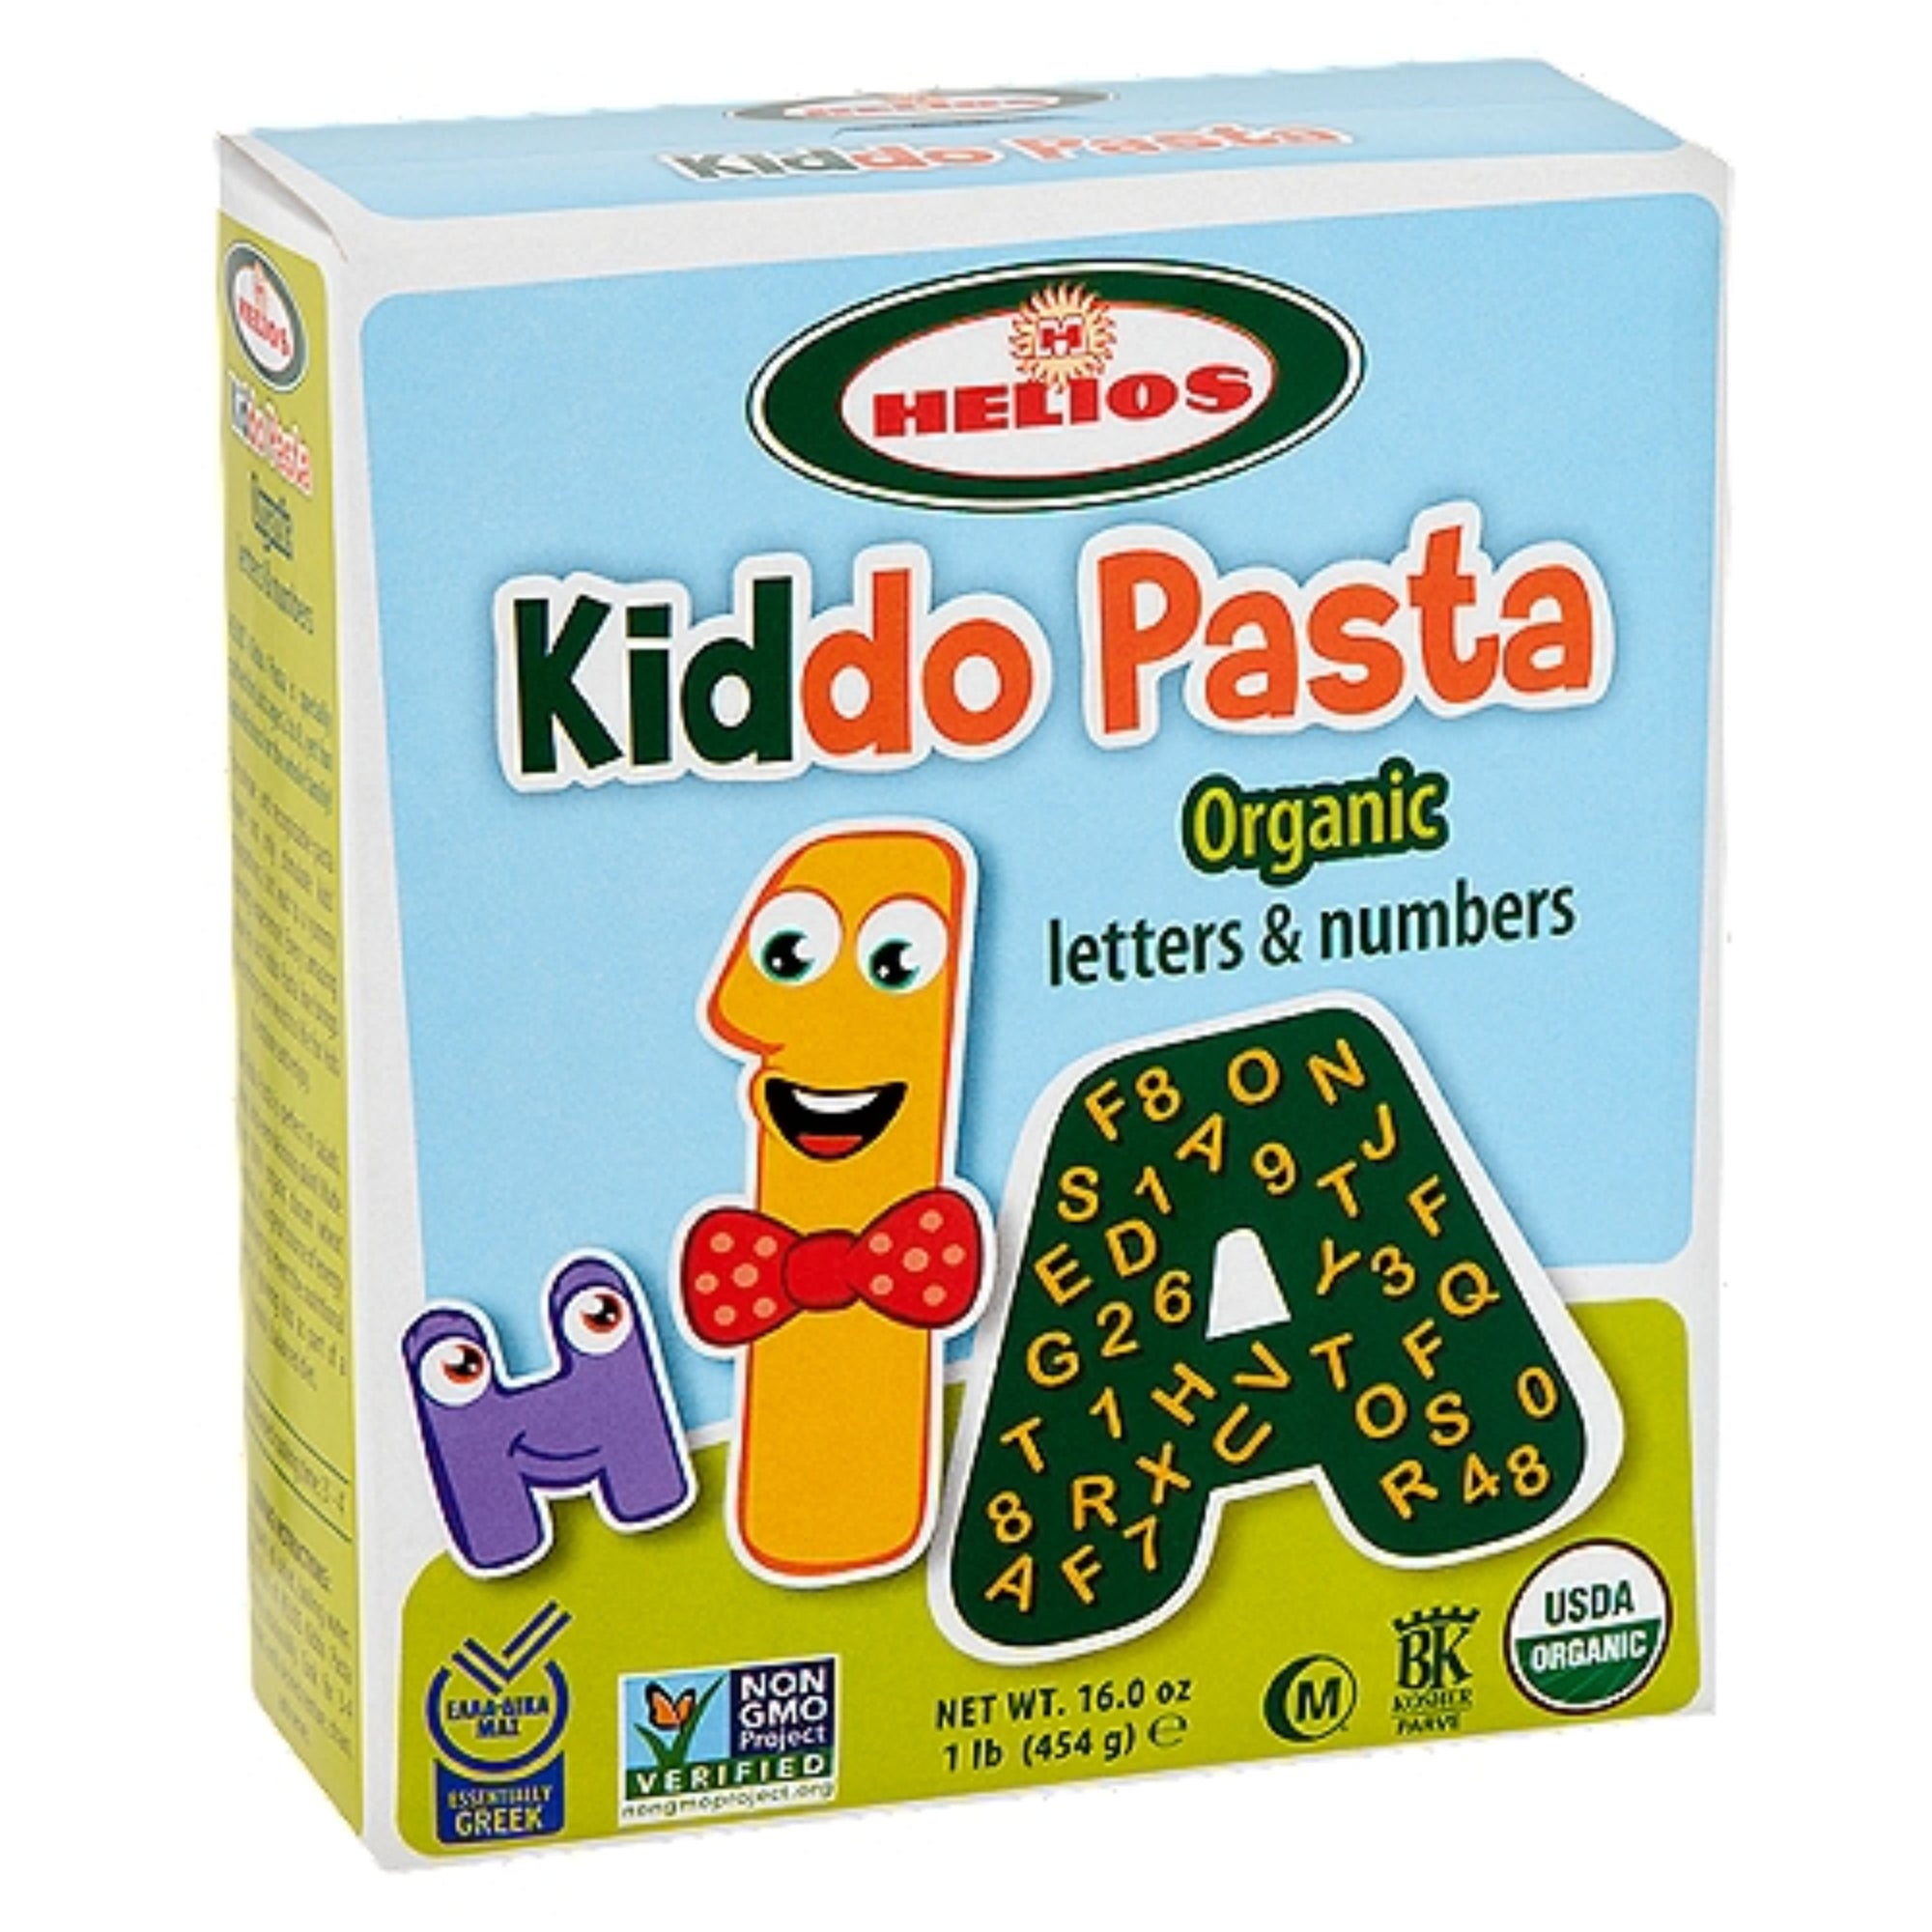 'Helios' Organic Letters & Numbers Kiddo Pasta 454g